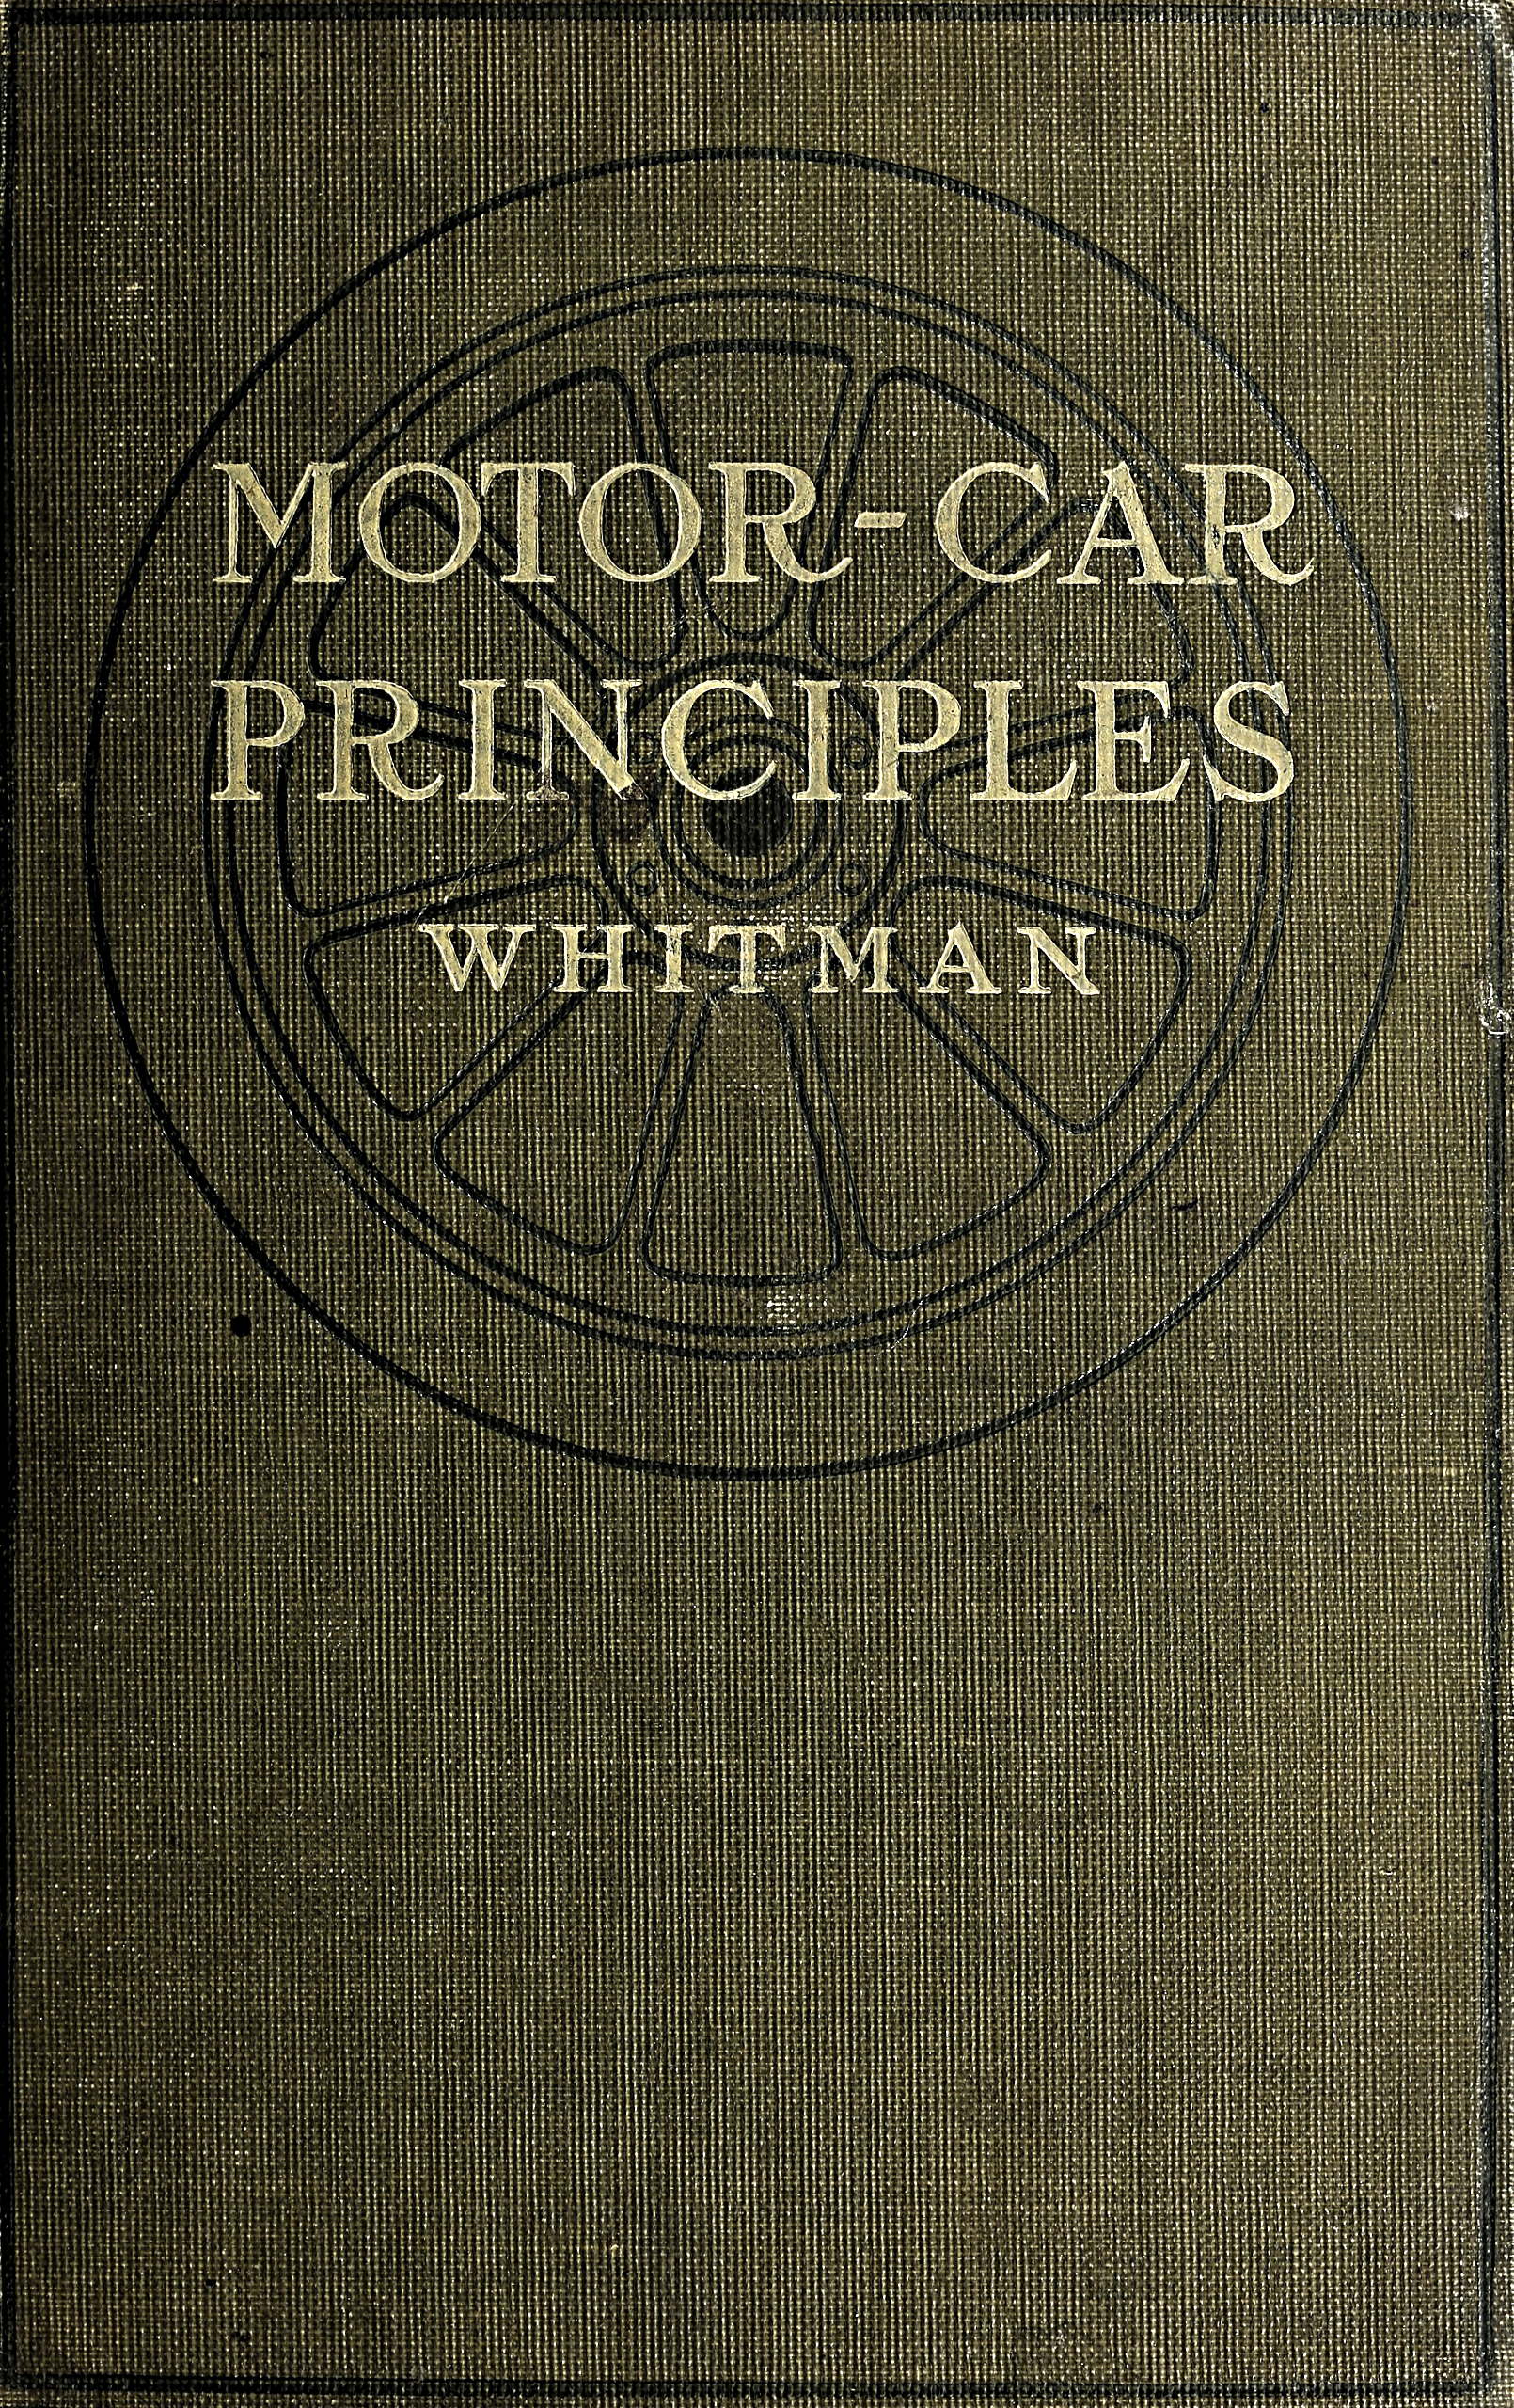 Motor-car principles; the gasoline automobile